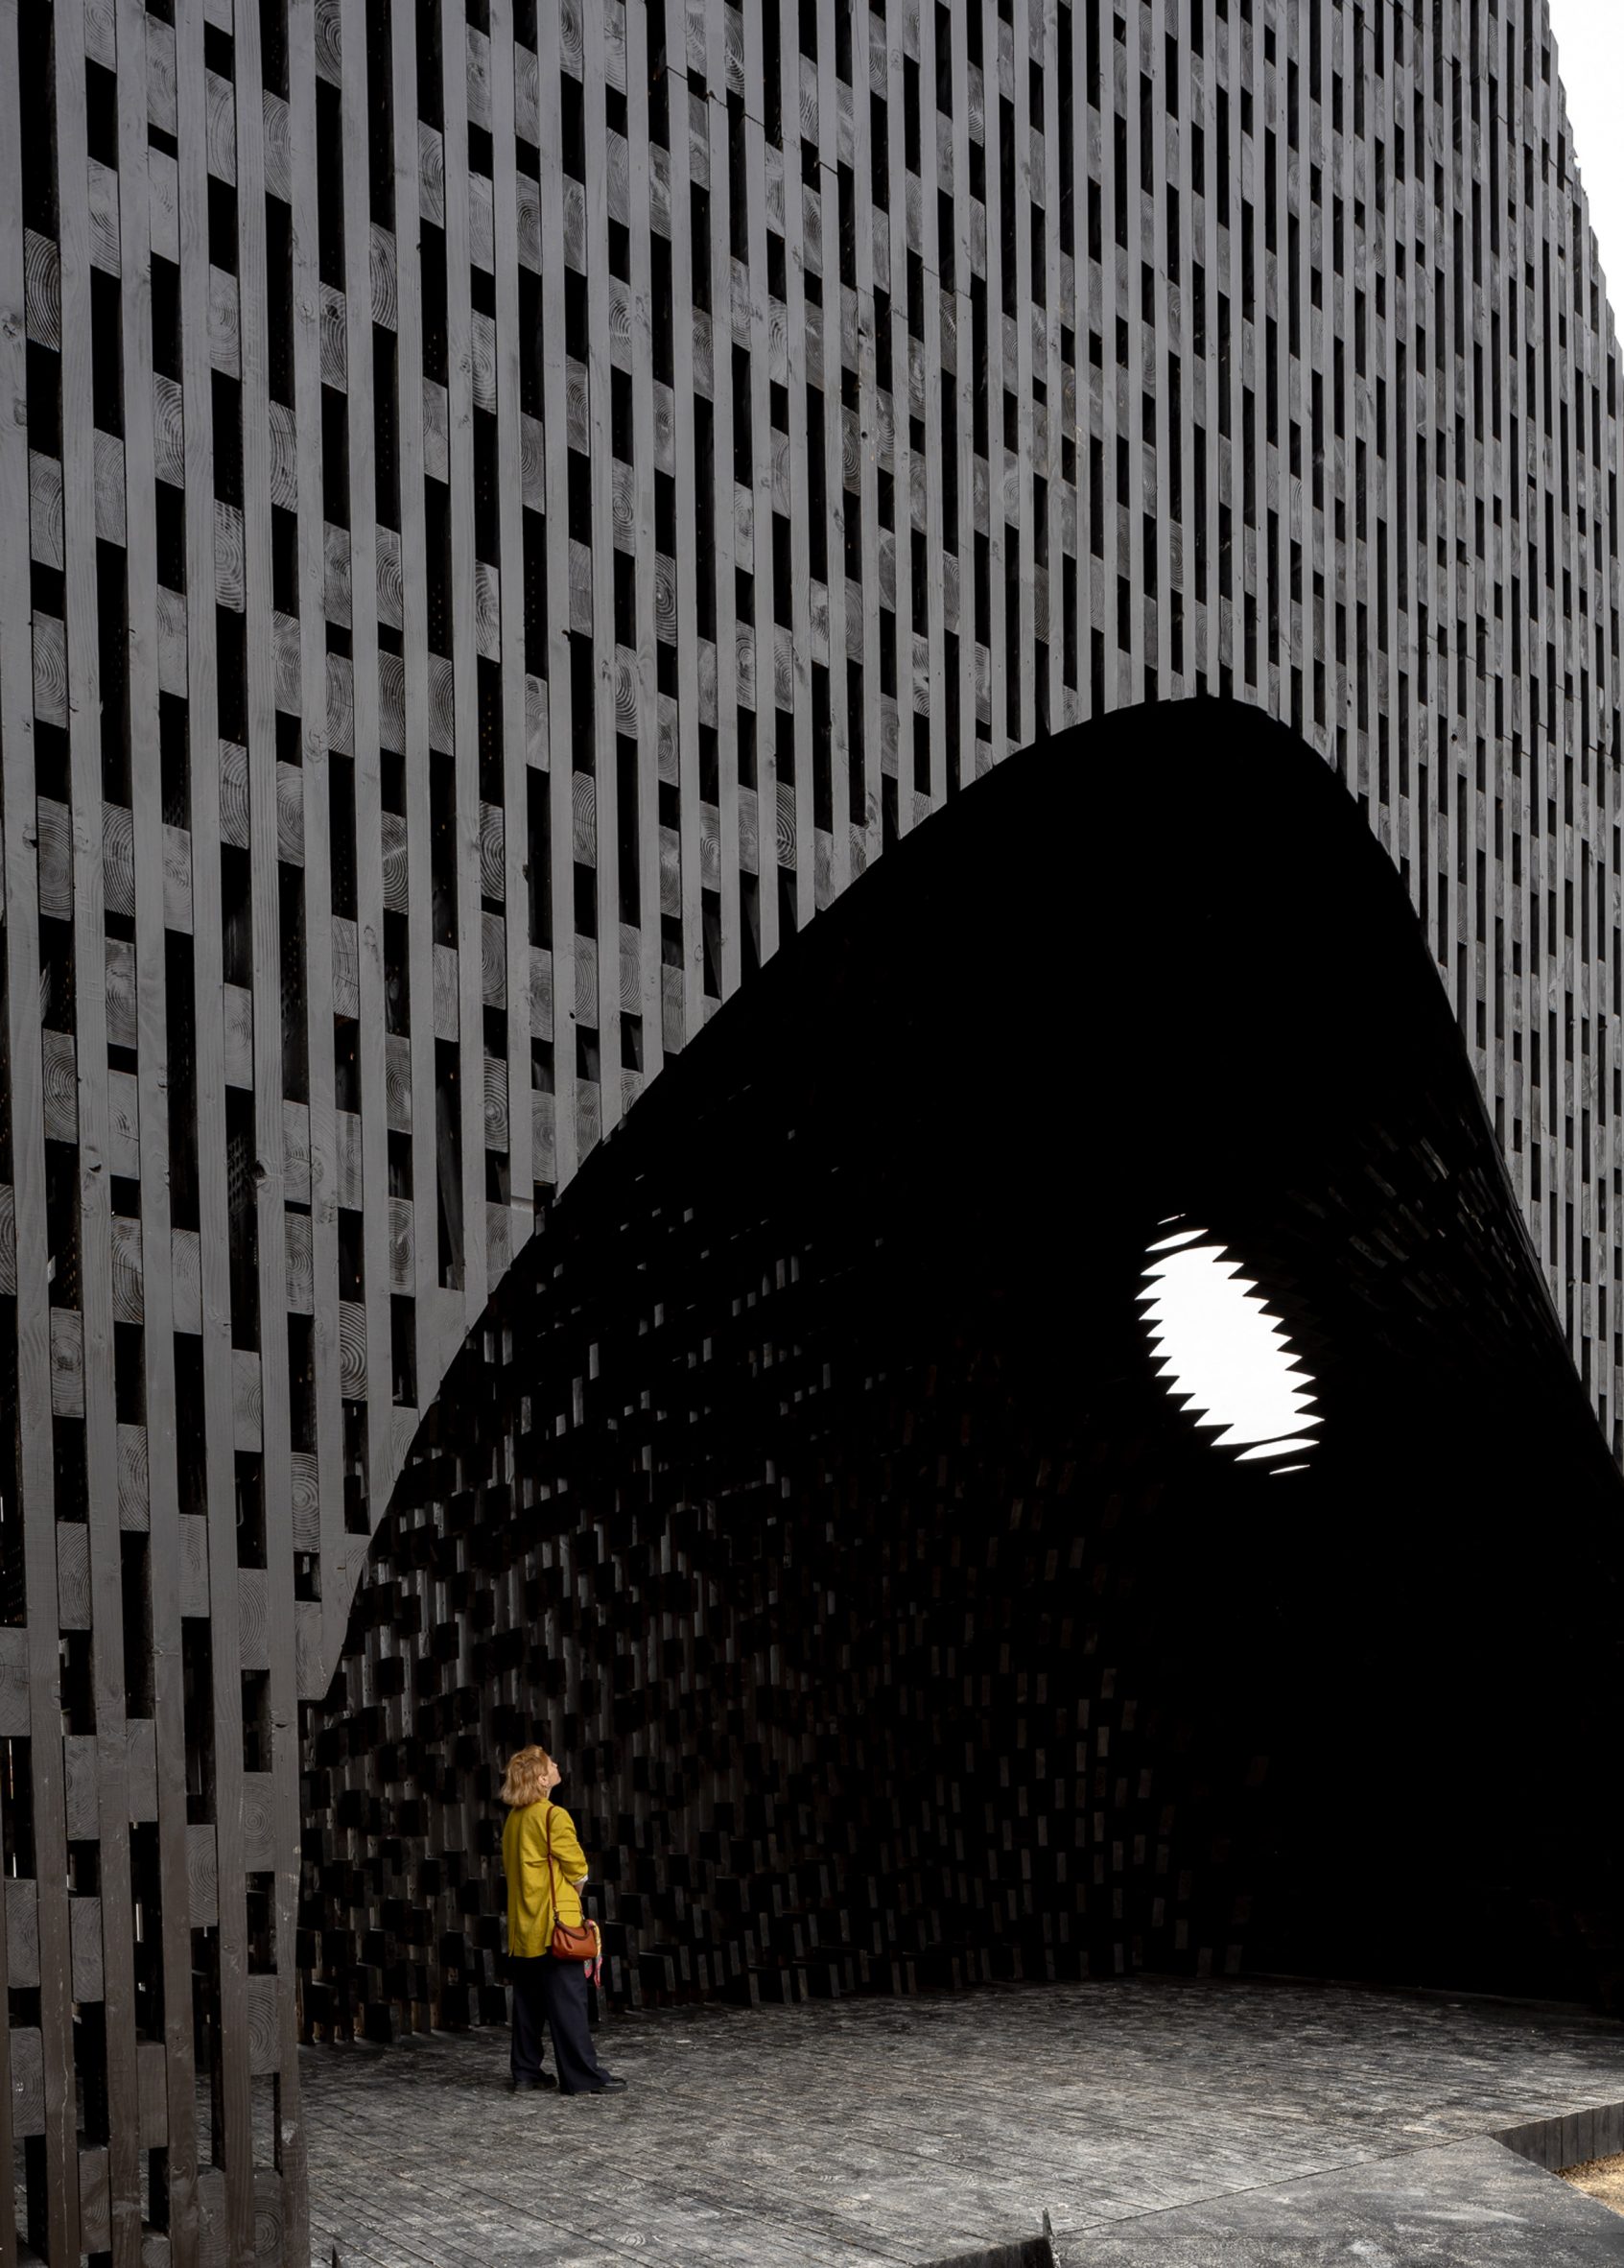 David Adjaye-design Kwaee pavilion by David Adjaye at Venice Architecture Biennale